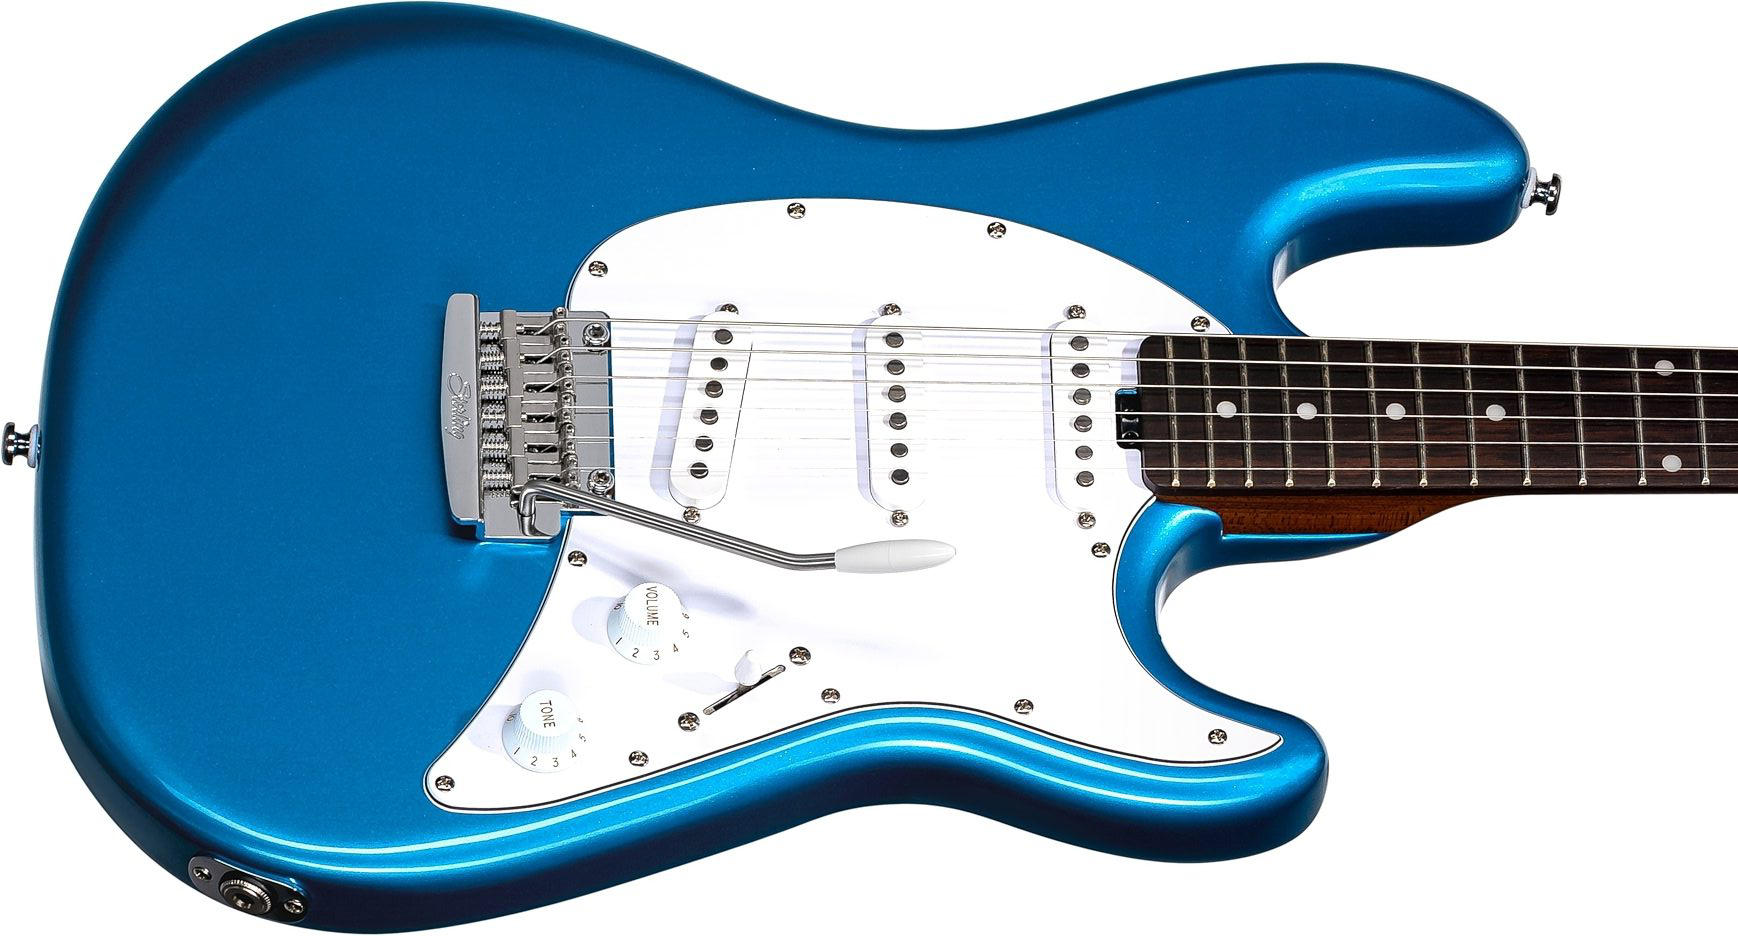 Sterling By Musicman Cutlass Ct50sss 3s Trem Rw - Toluca Lake Blue - Str shape electric guitar - Variation 2